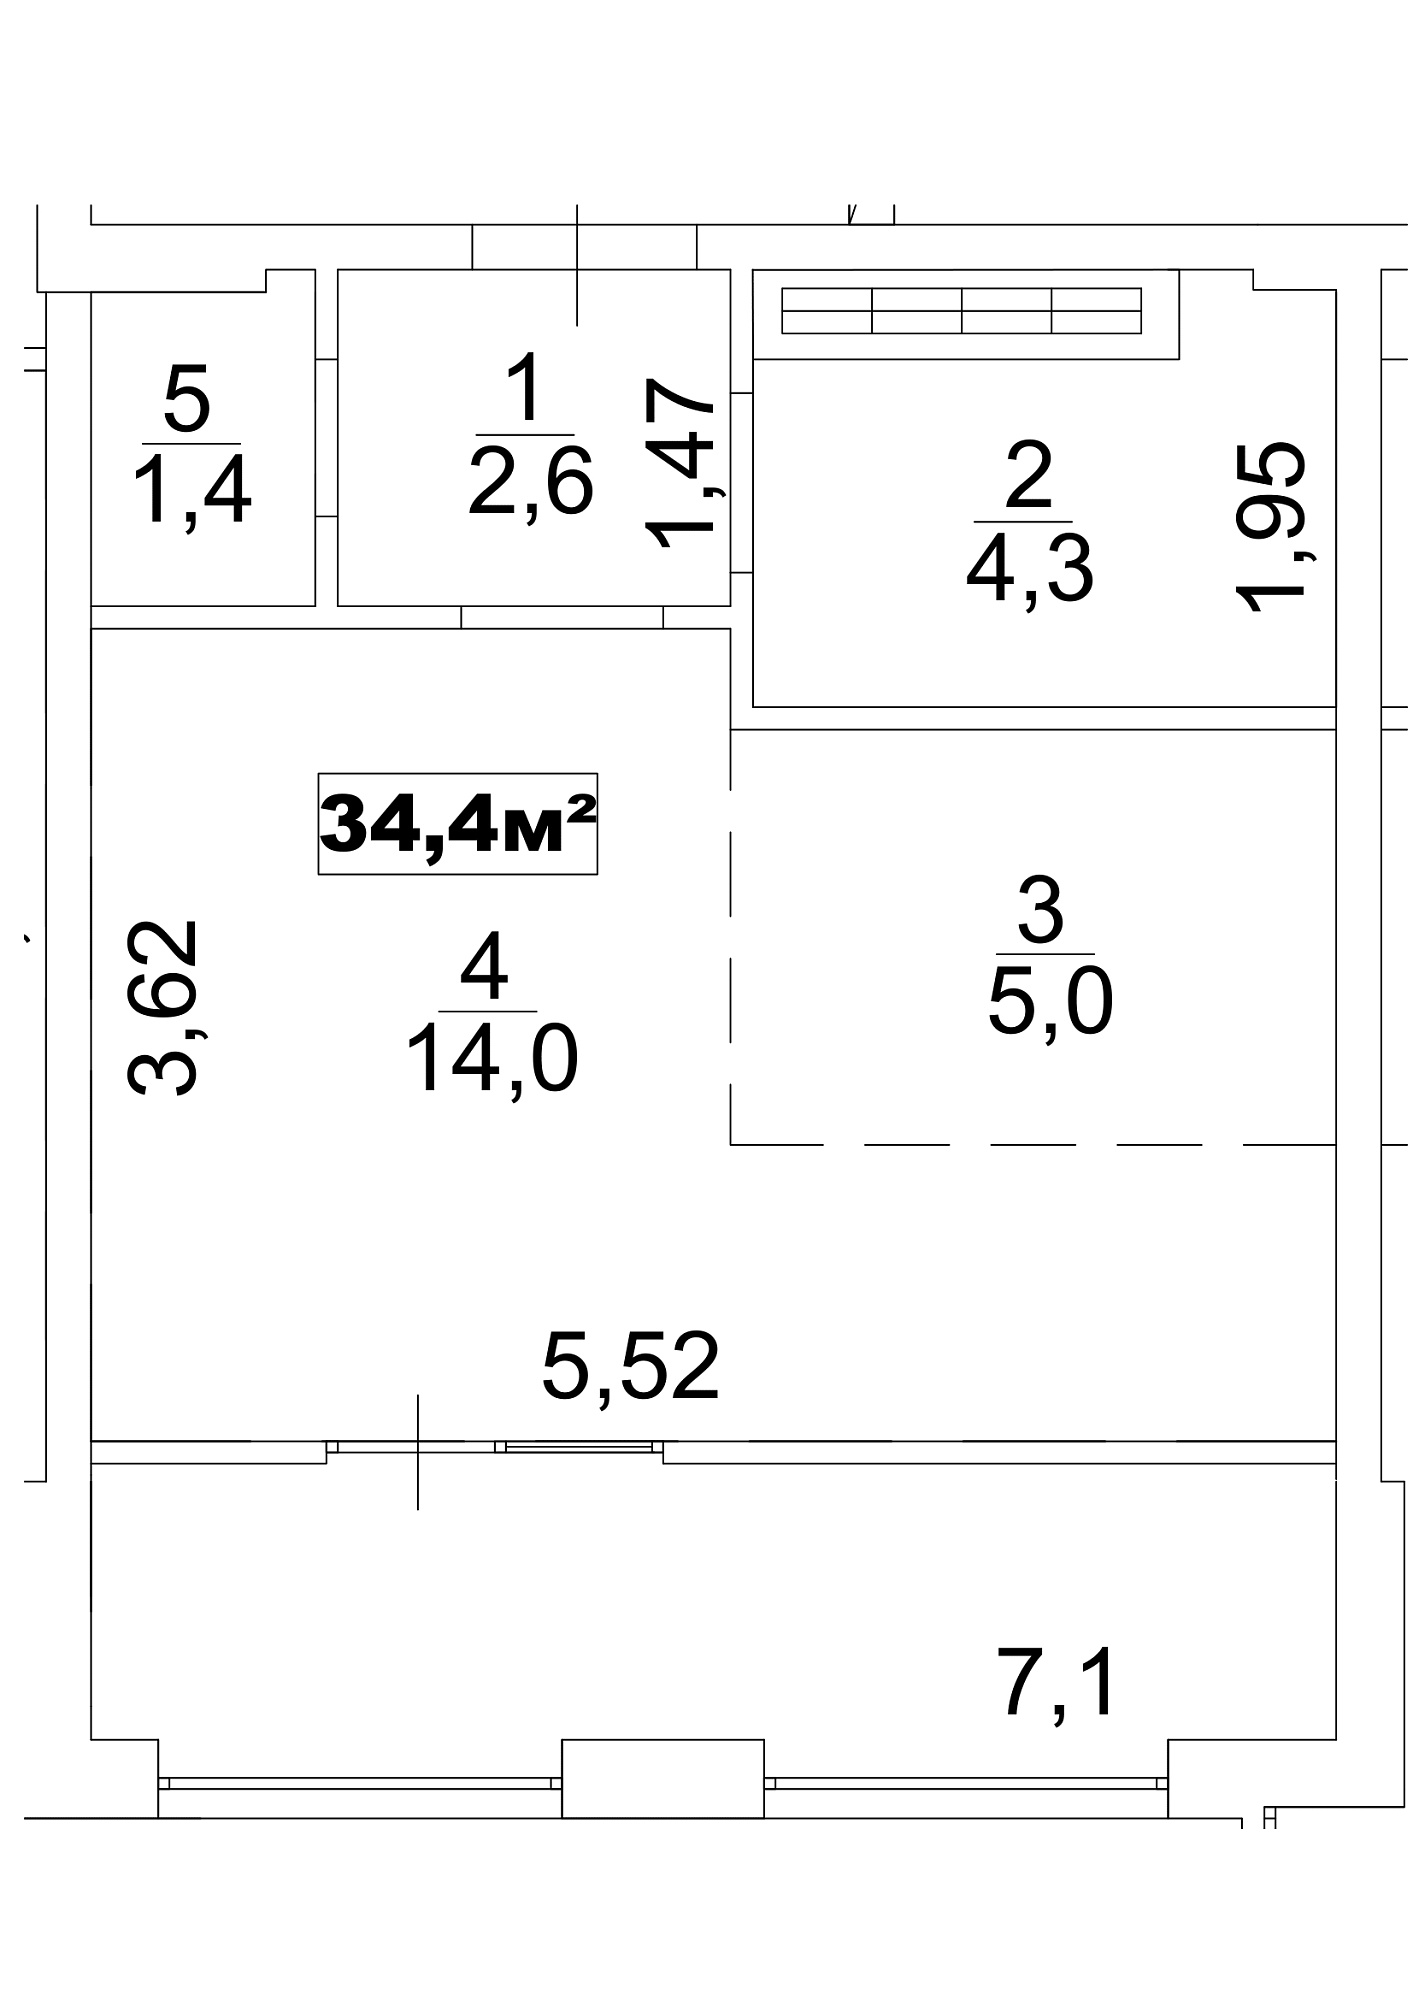 Planning Smart flats area 34.4m2, AB-13-10/00080.